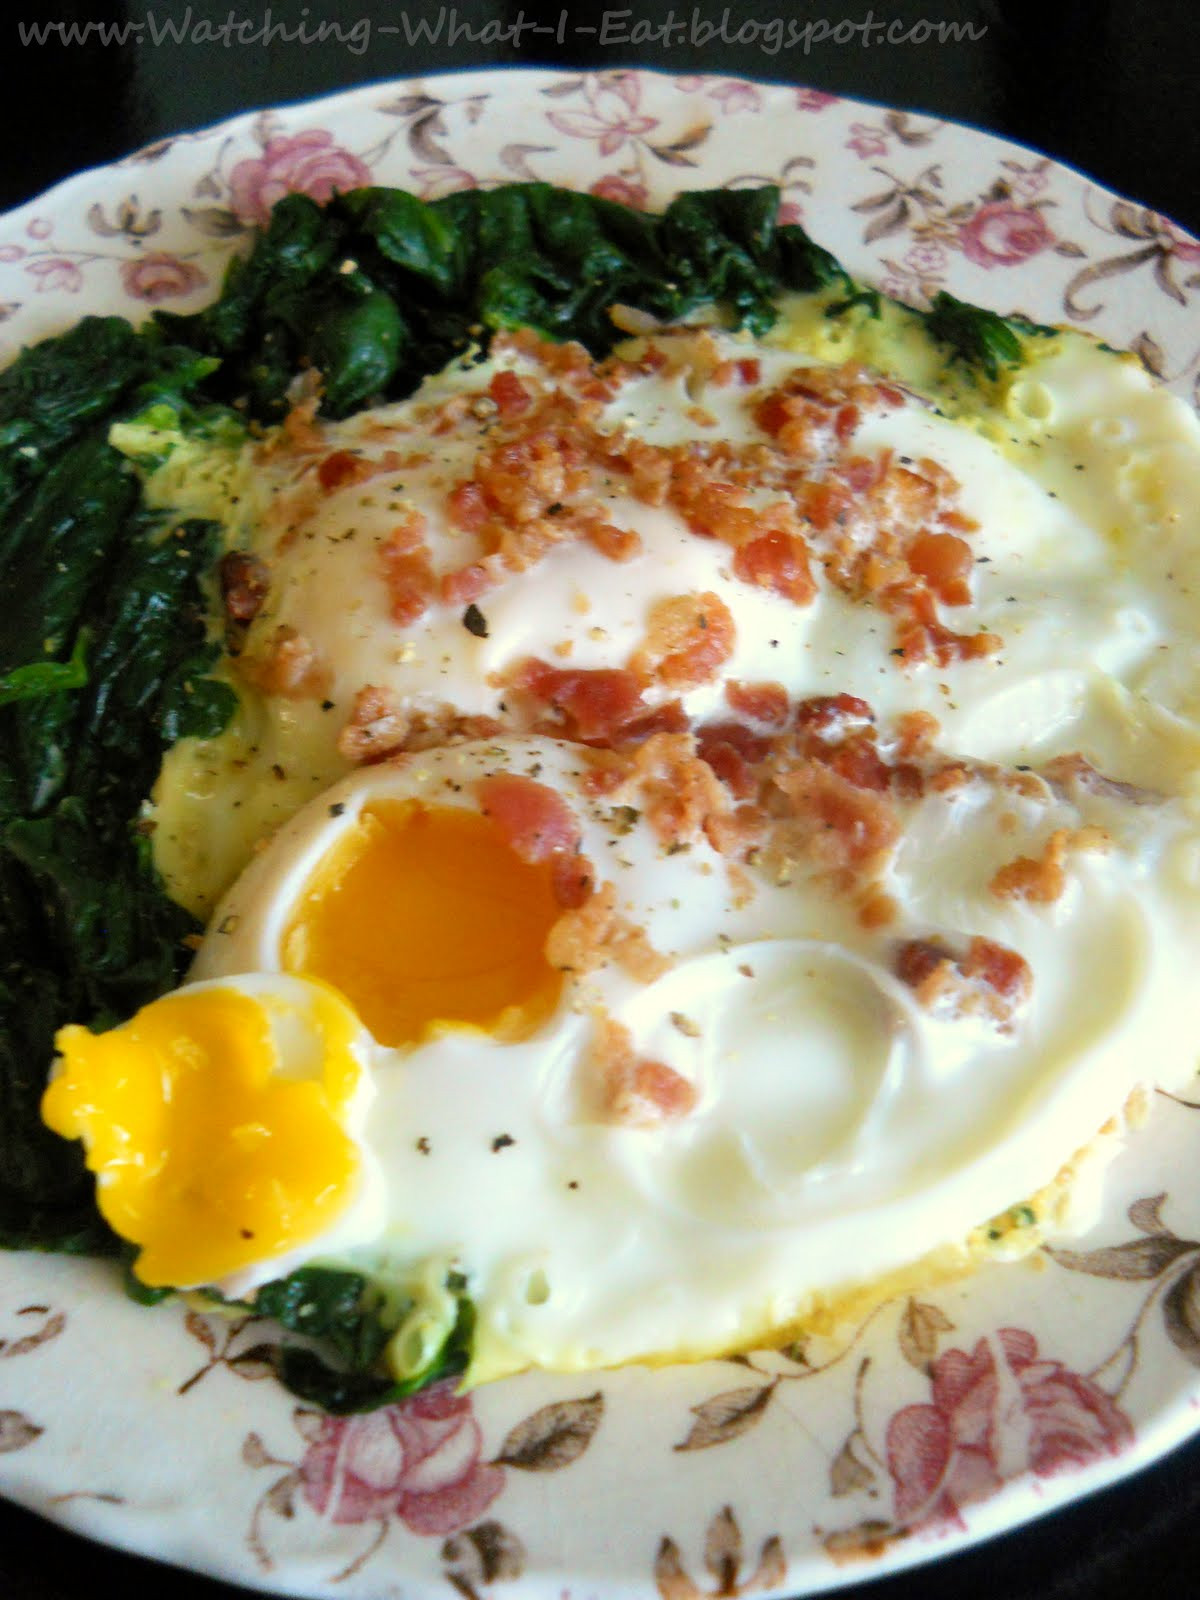 Lowfat Breakfast Recipes
 Watching What I Eat Eggs for Breakfast Low Fat Low